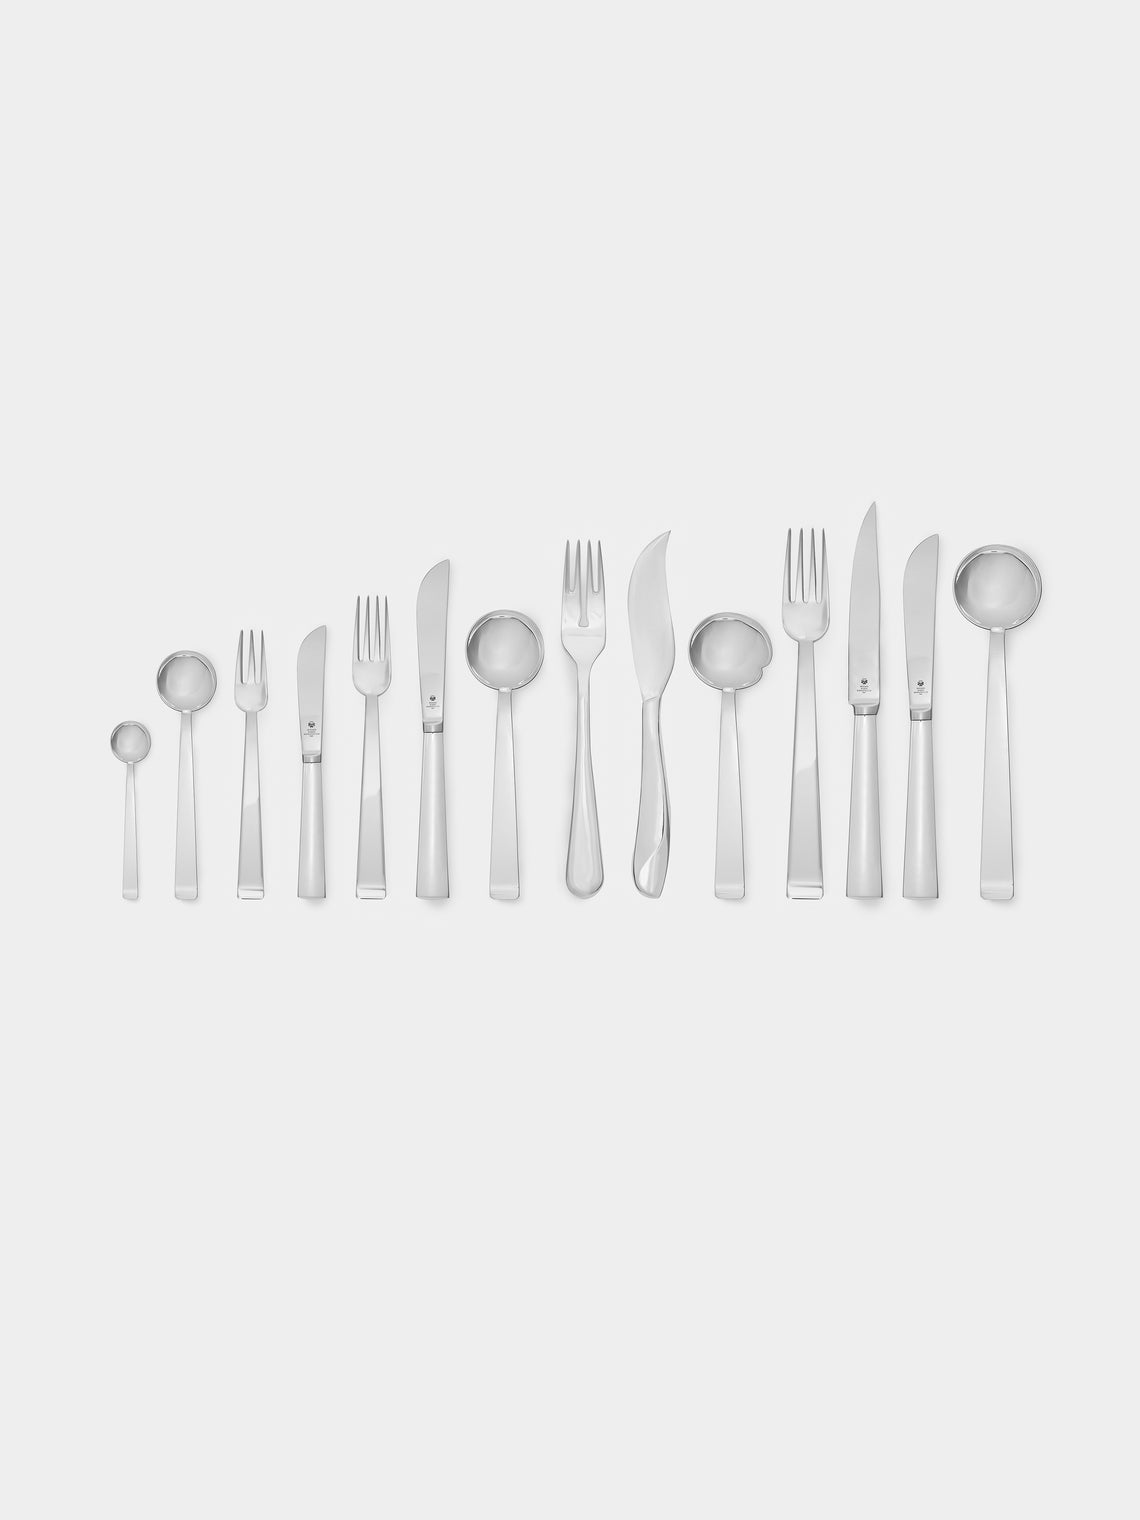 Wiener Silber Manufactur - Josef Hoffmann 135 Silver-Plated Teaspoon - Silver - ABASK